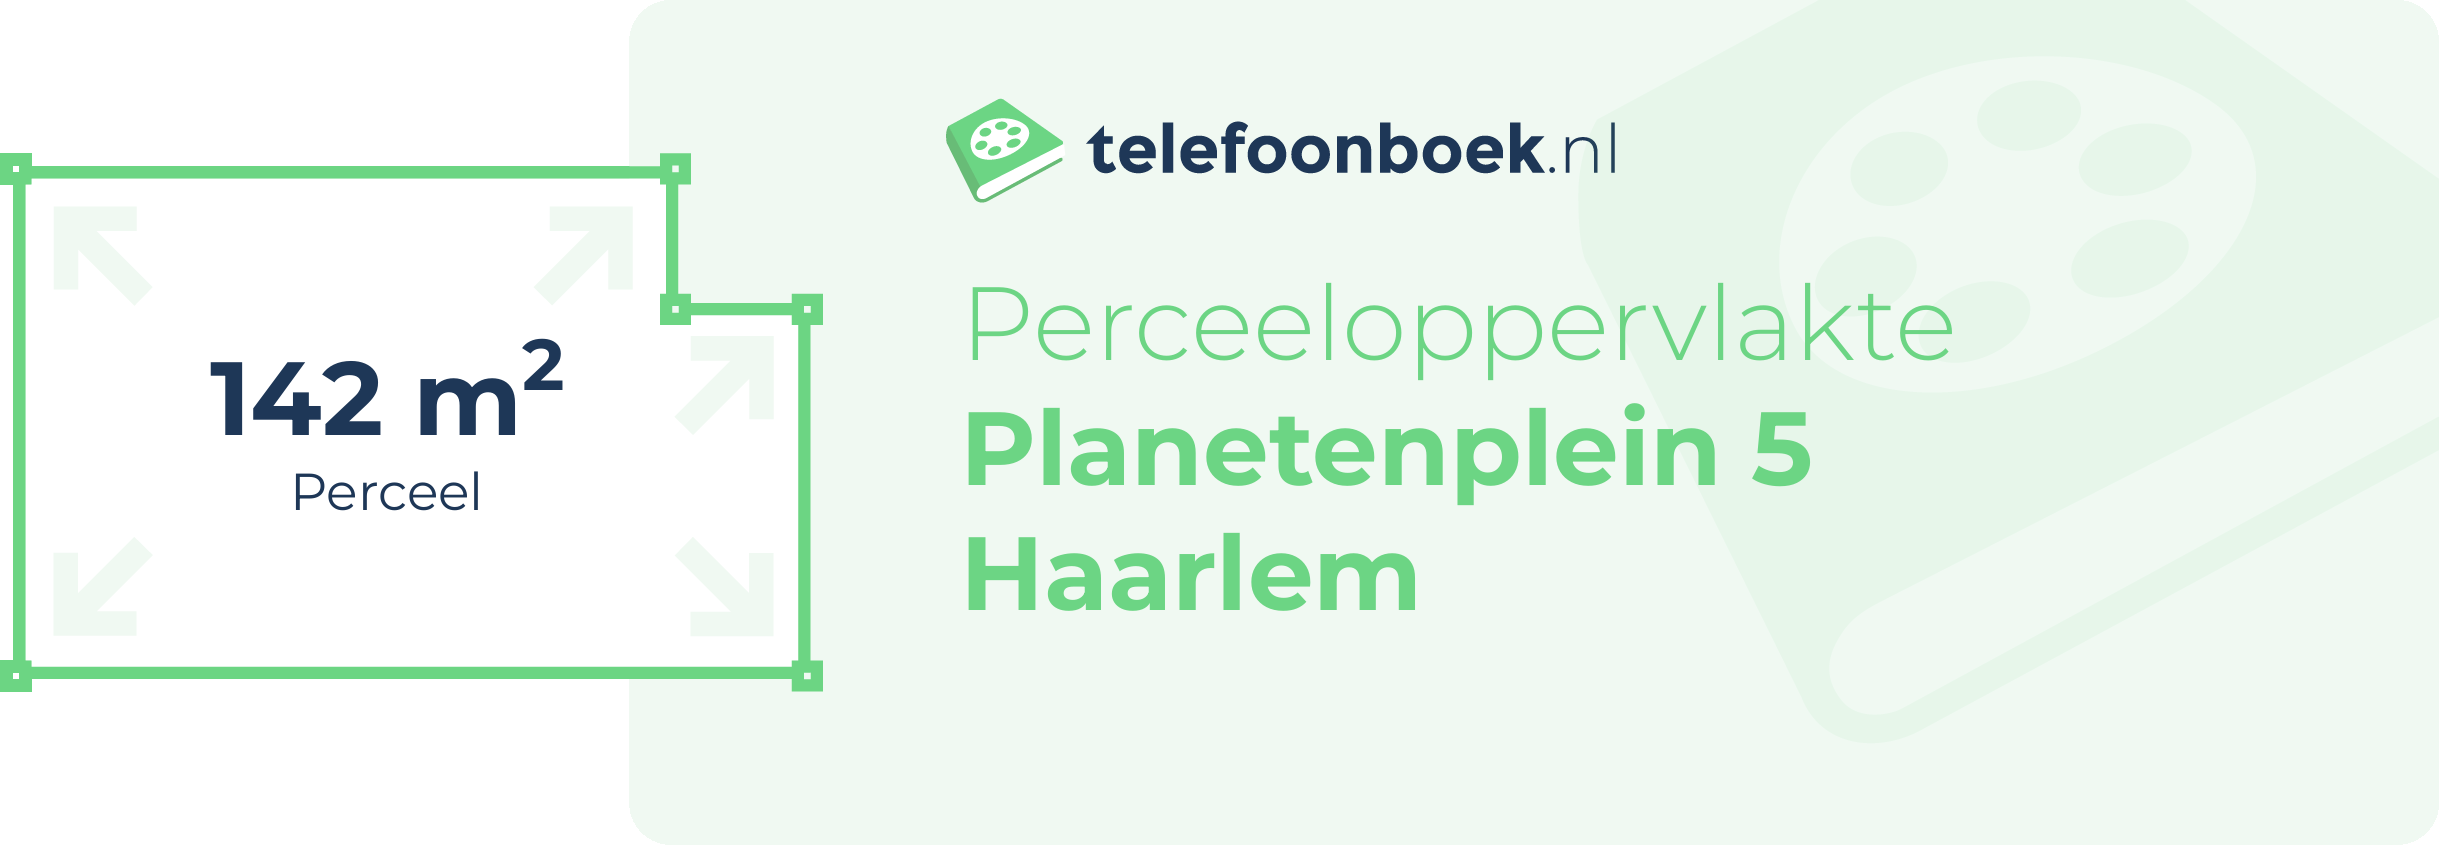 Perceeloppervlakte Planetenplein 5 Haarlem